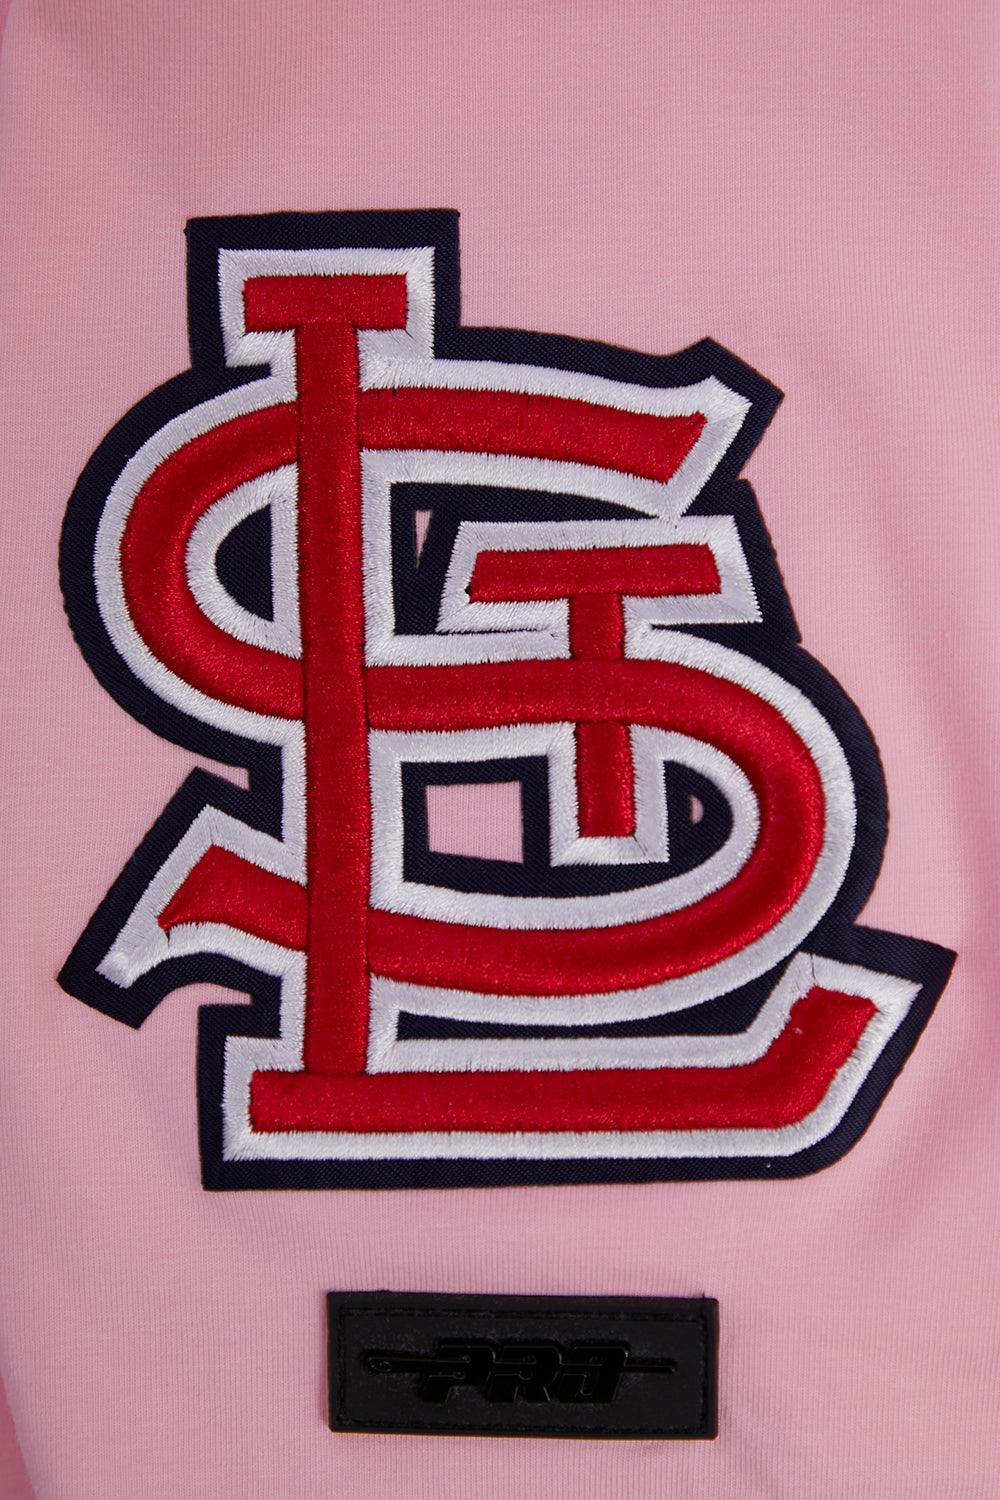 st louis cardinals pink jersey